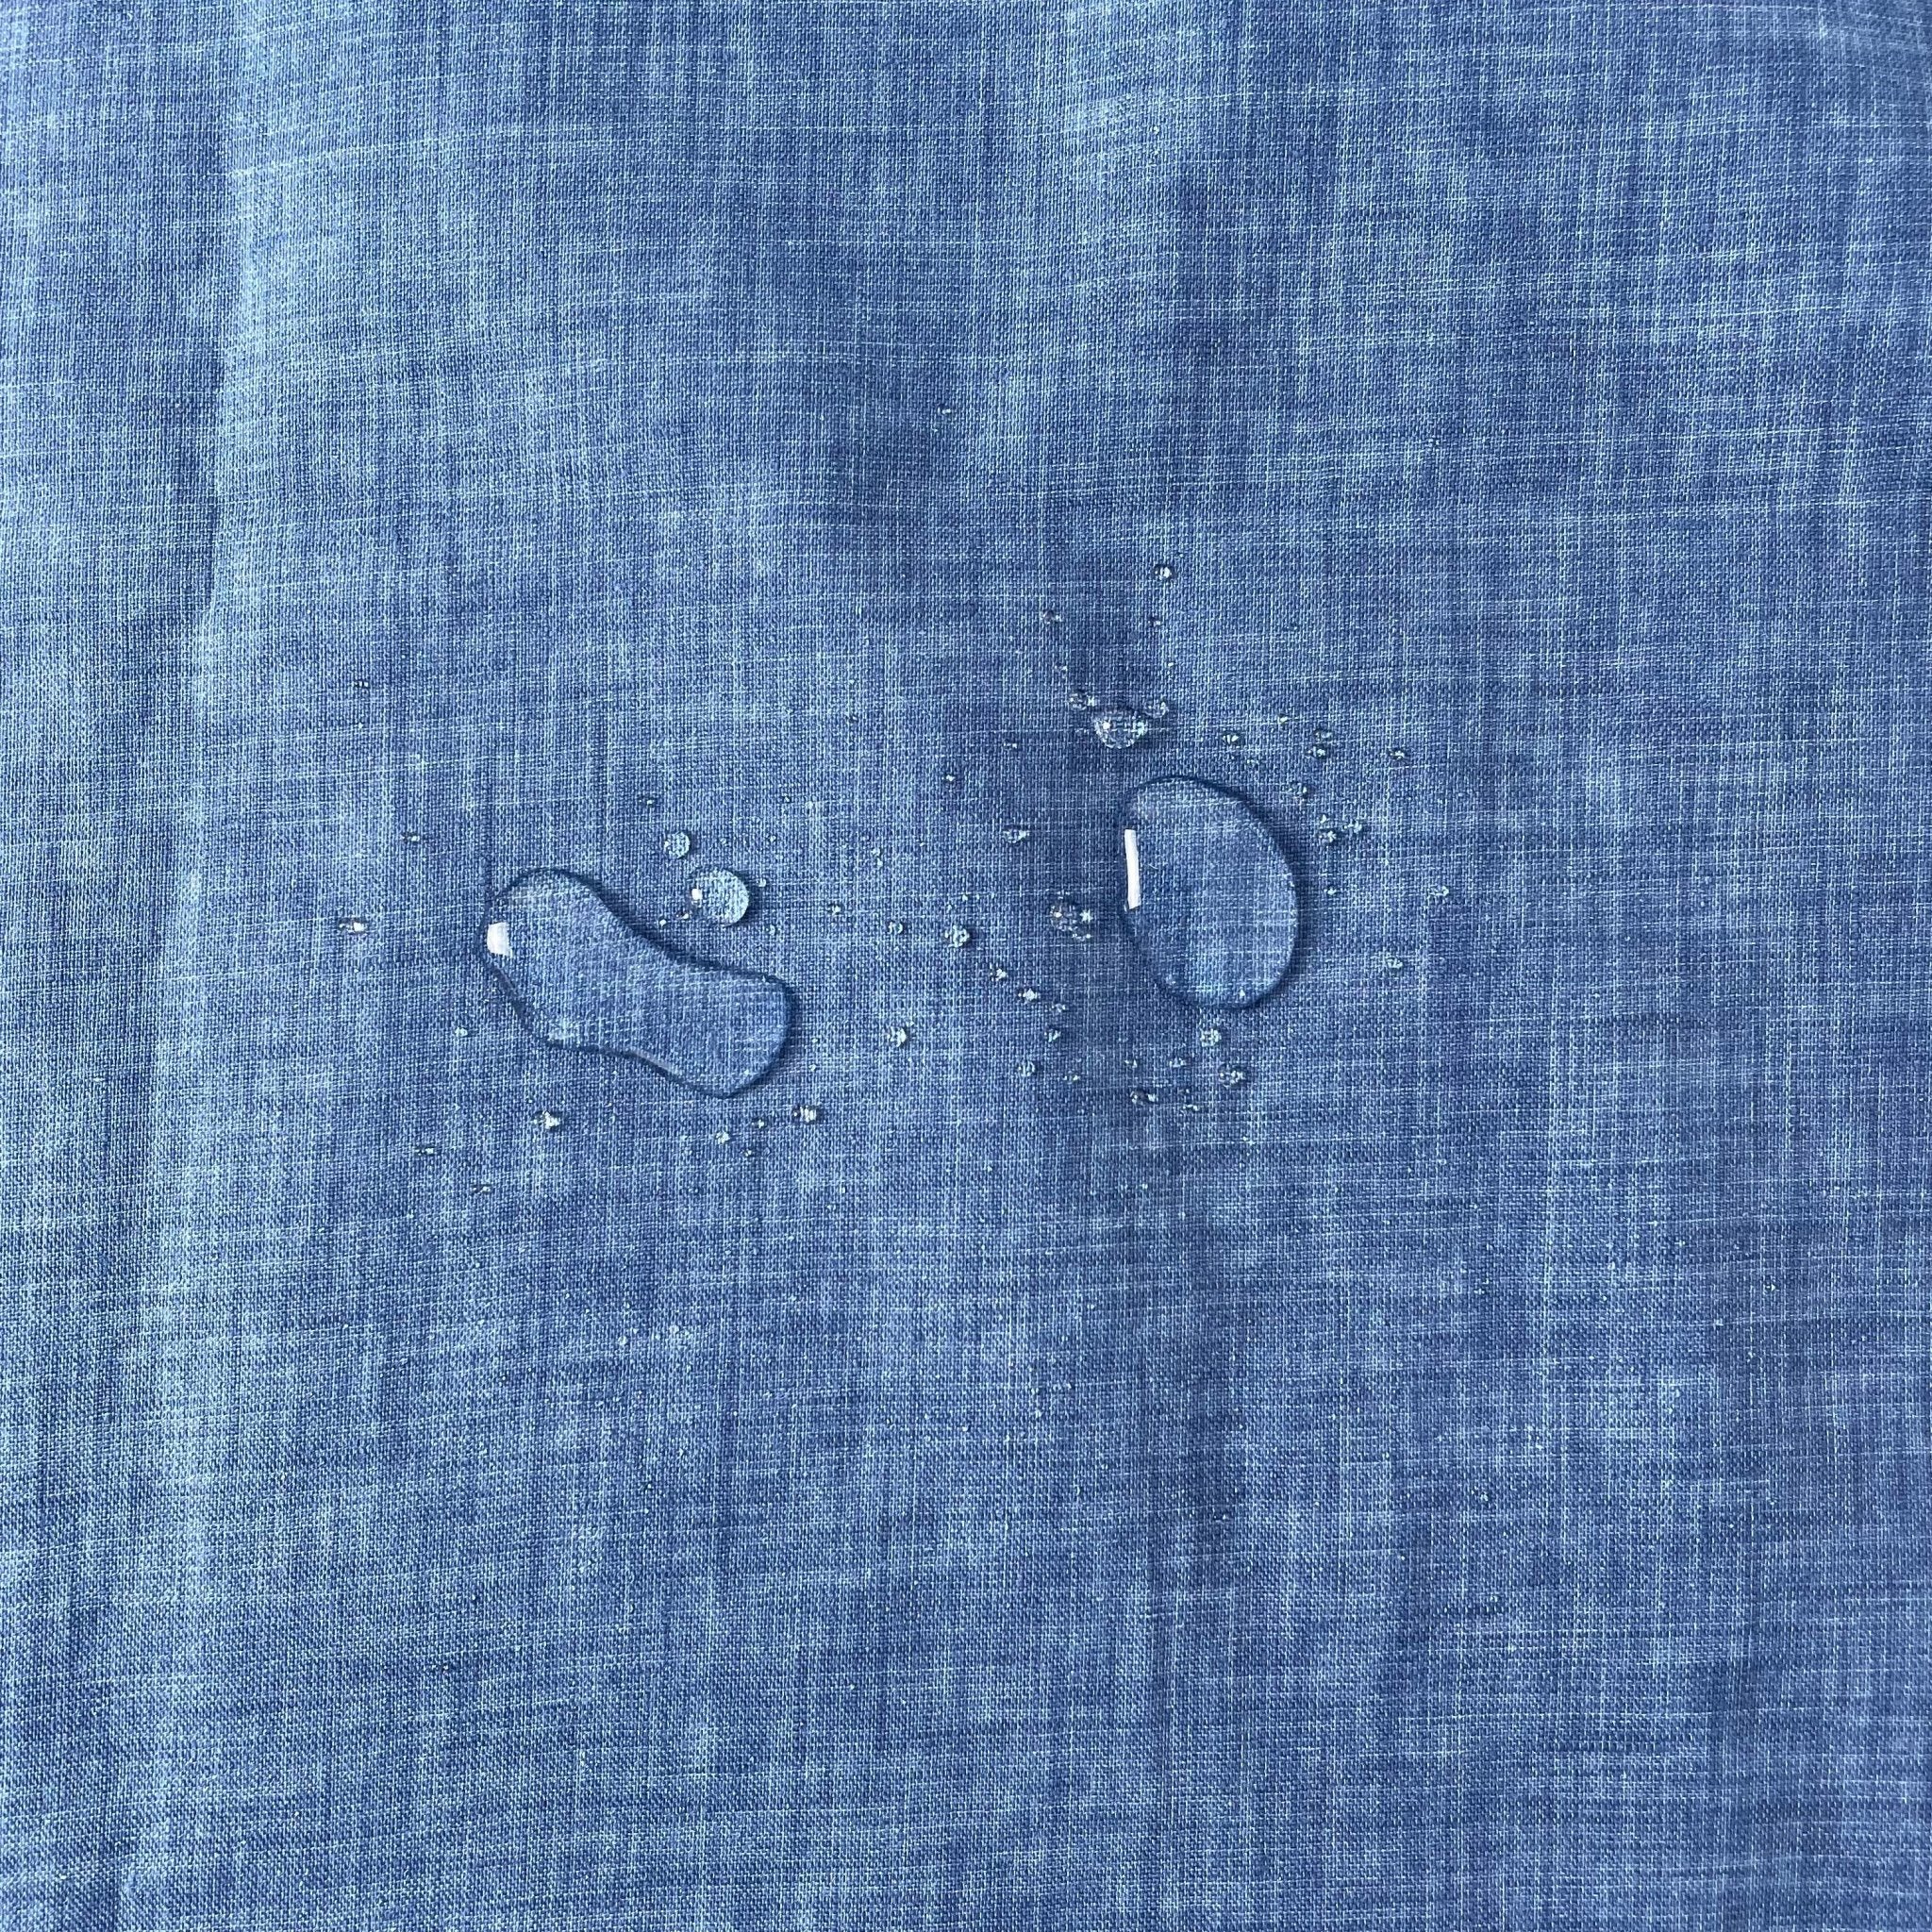 Linen Waterproof Fabric 4638 - The Linen Lab - 4638 BLUE